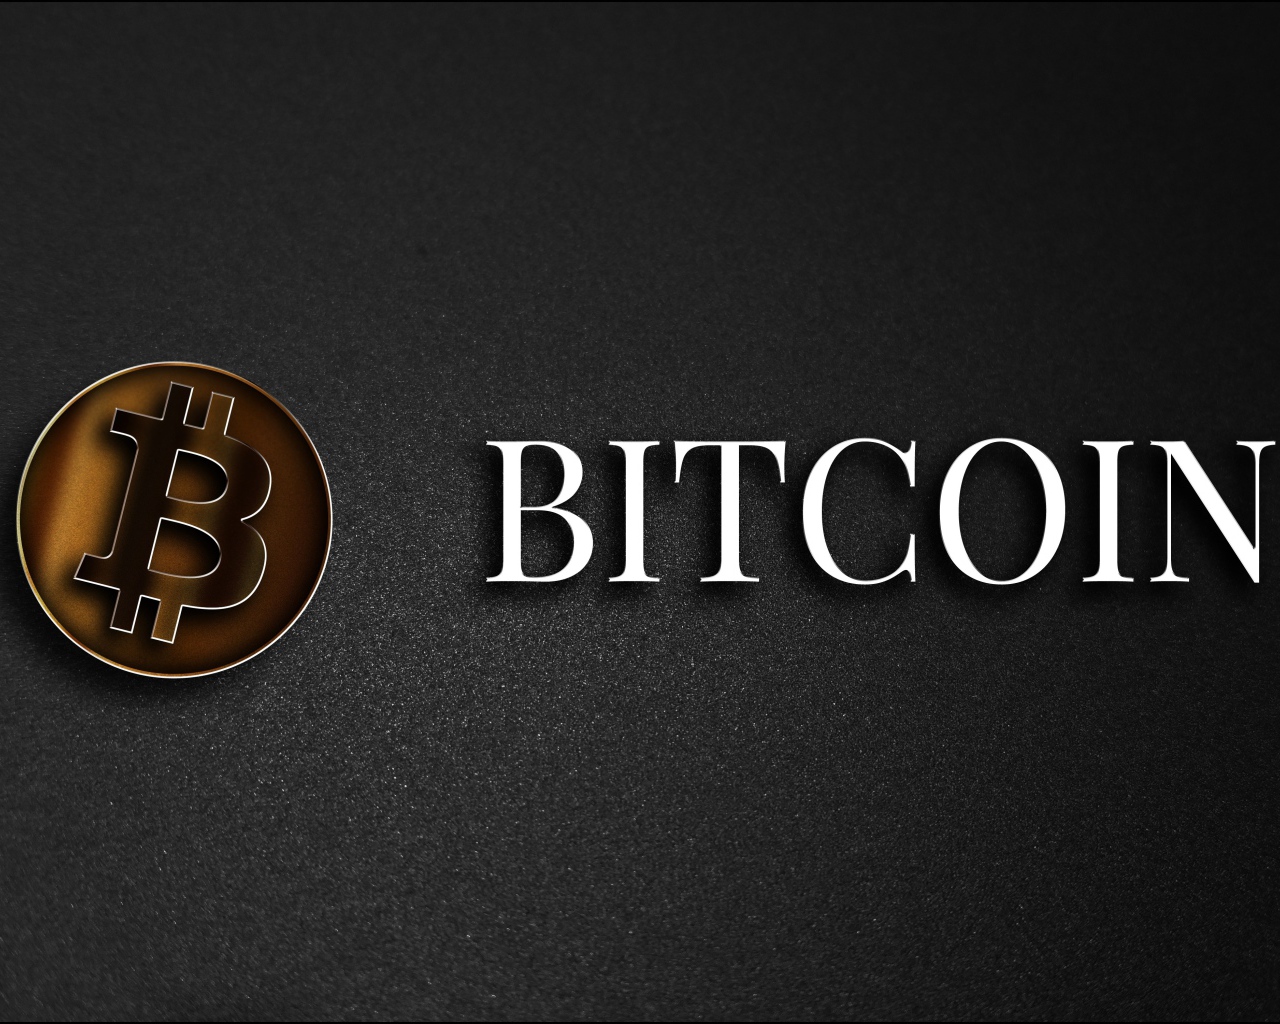 Inscription Bitcoin on a gray background